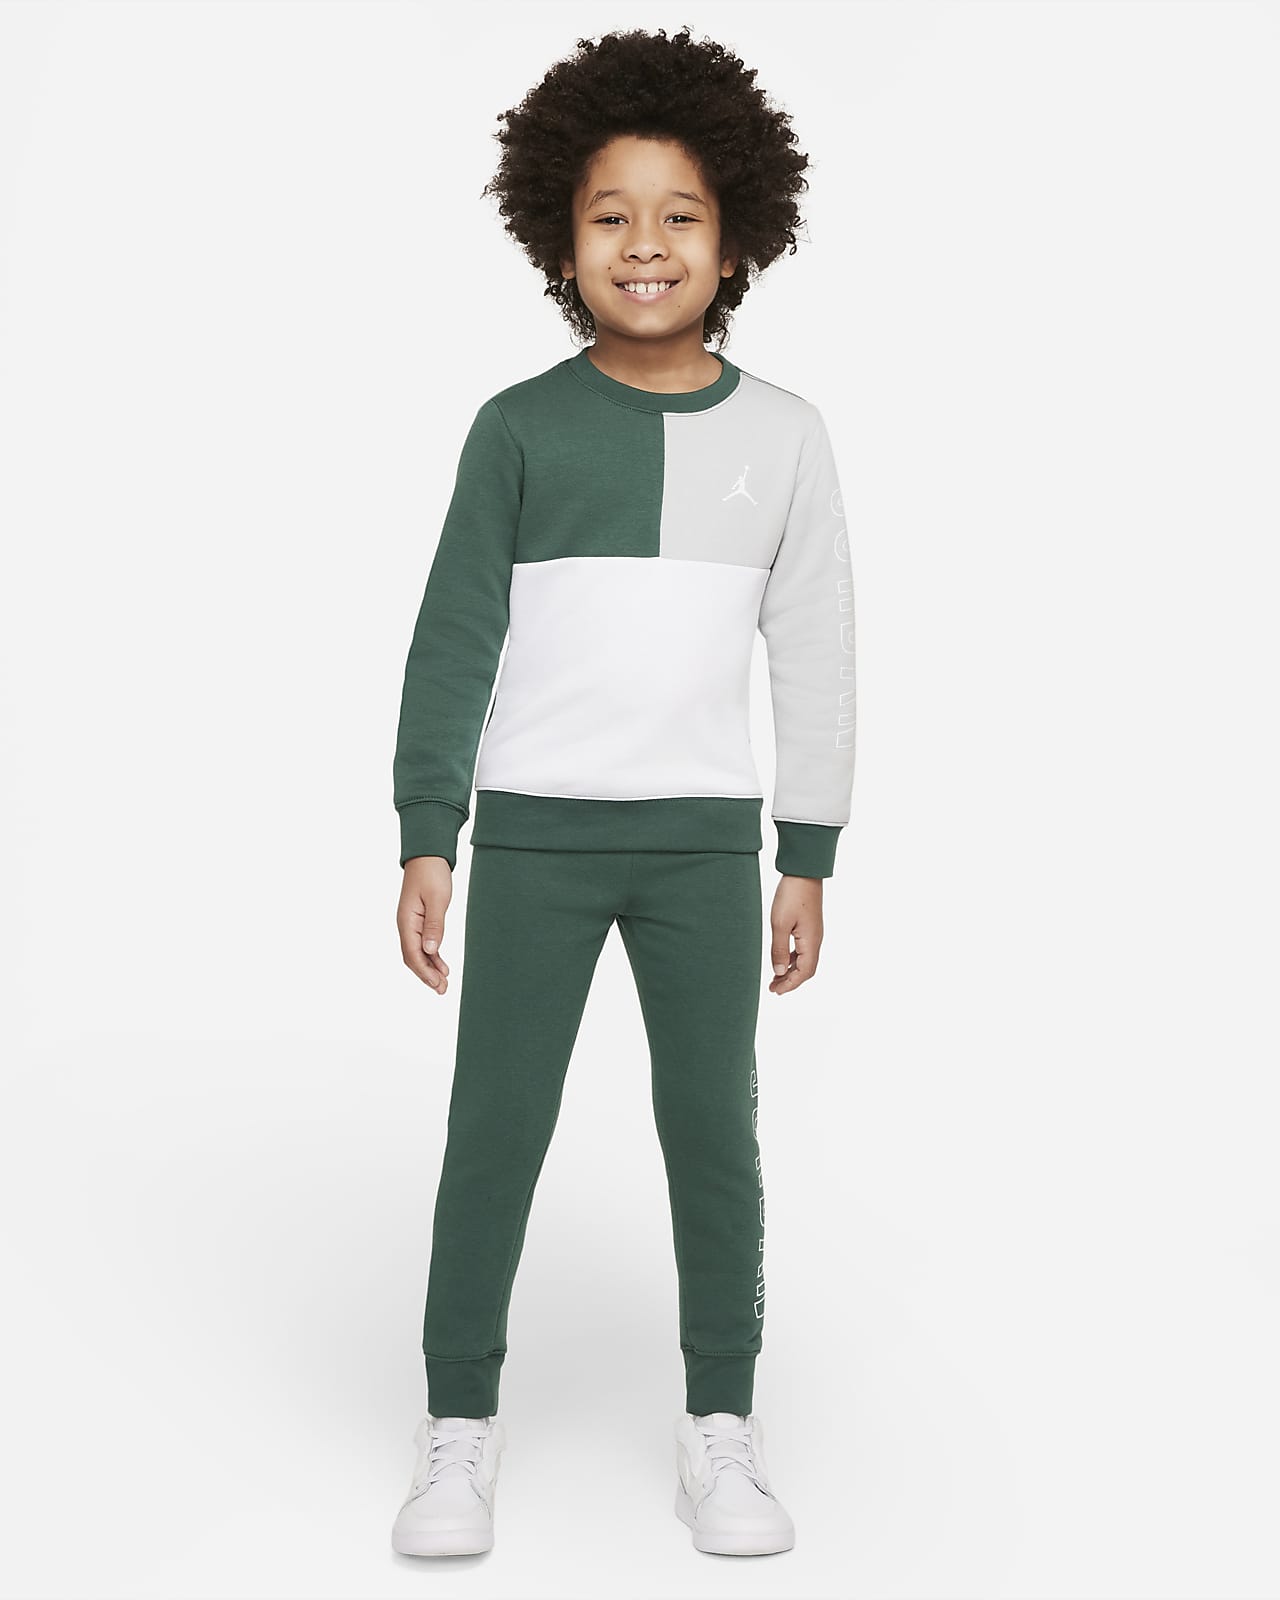 Jordan Little Kids' Sweatshirt and Pants Set